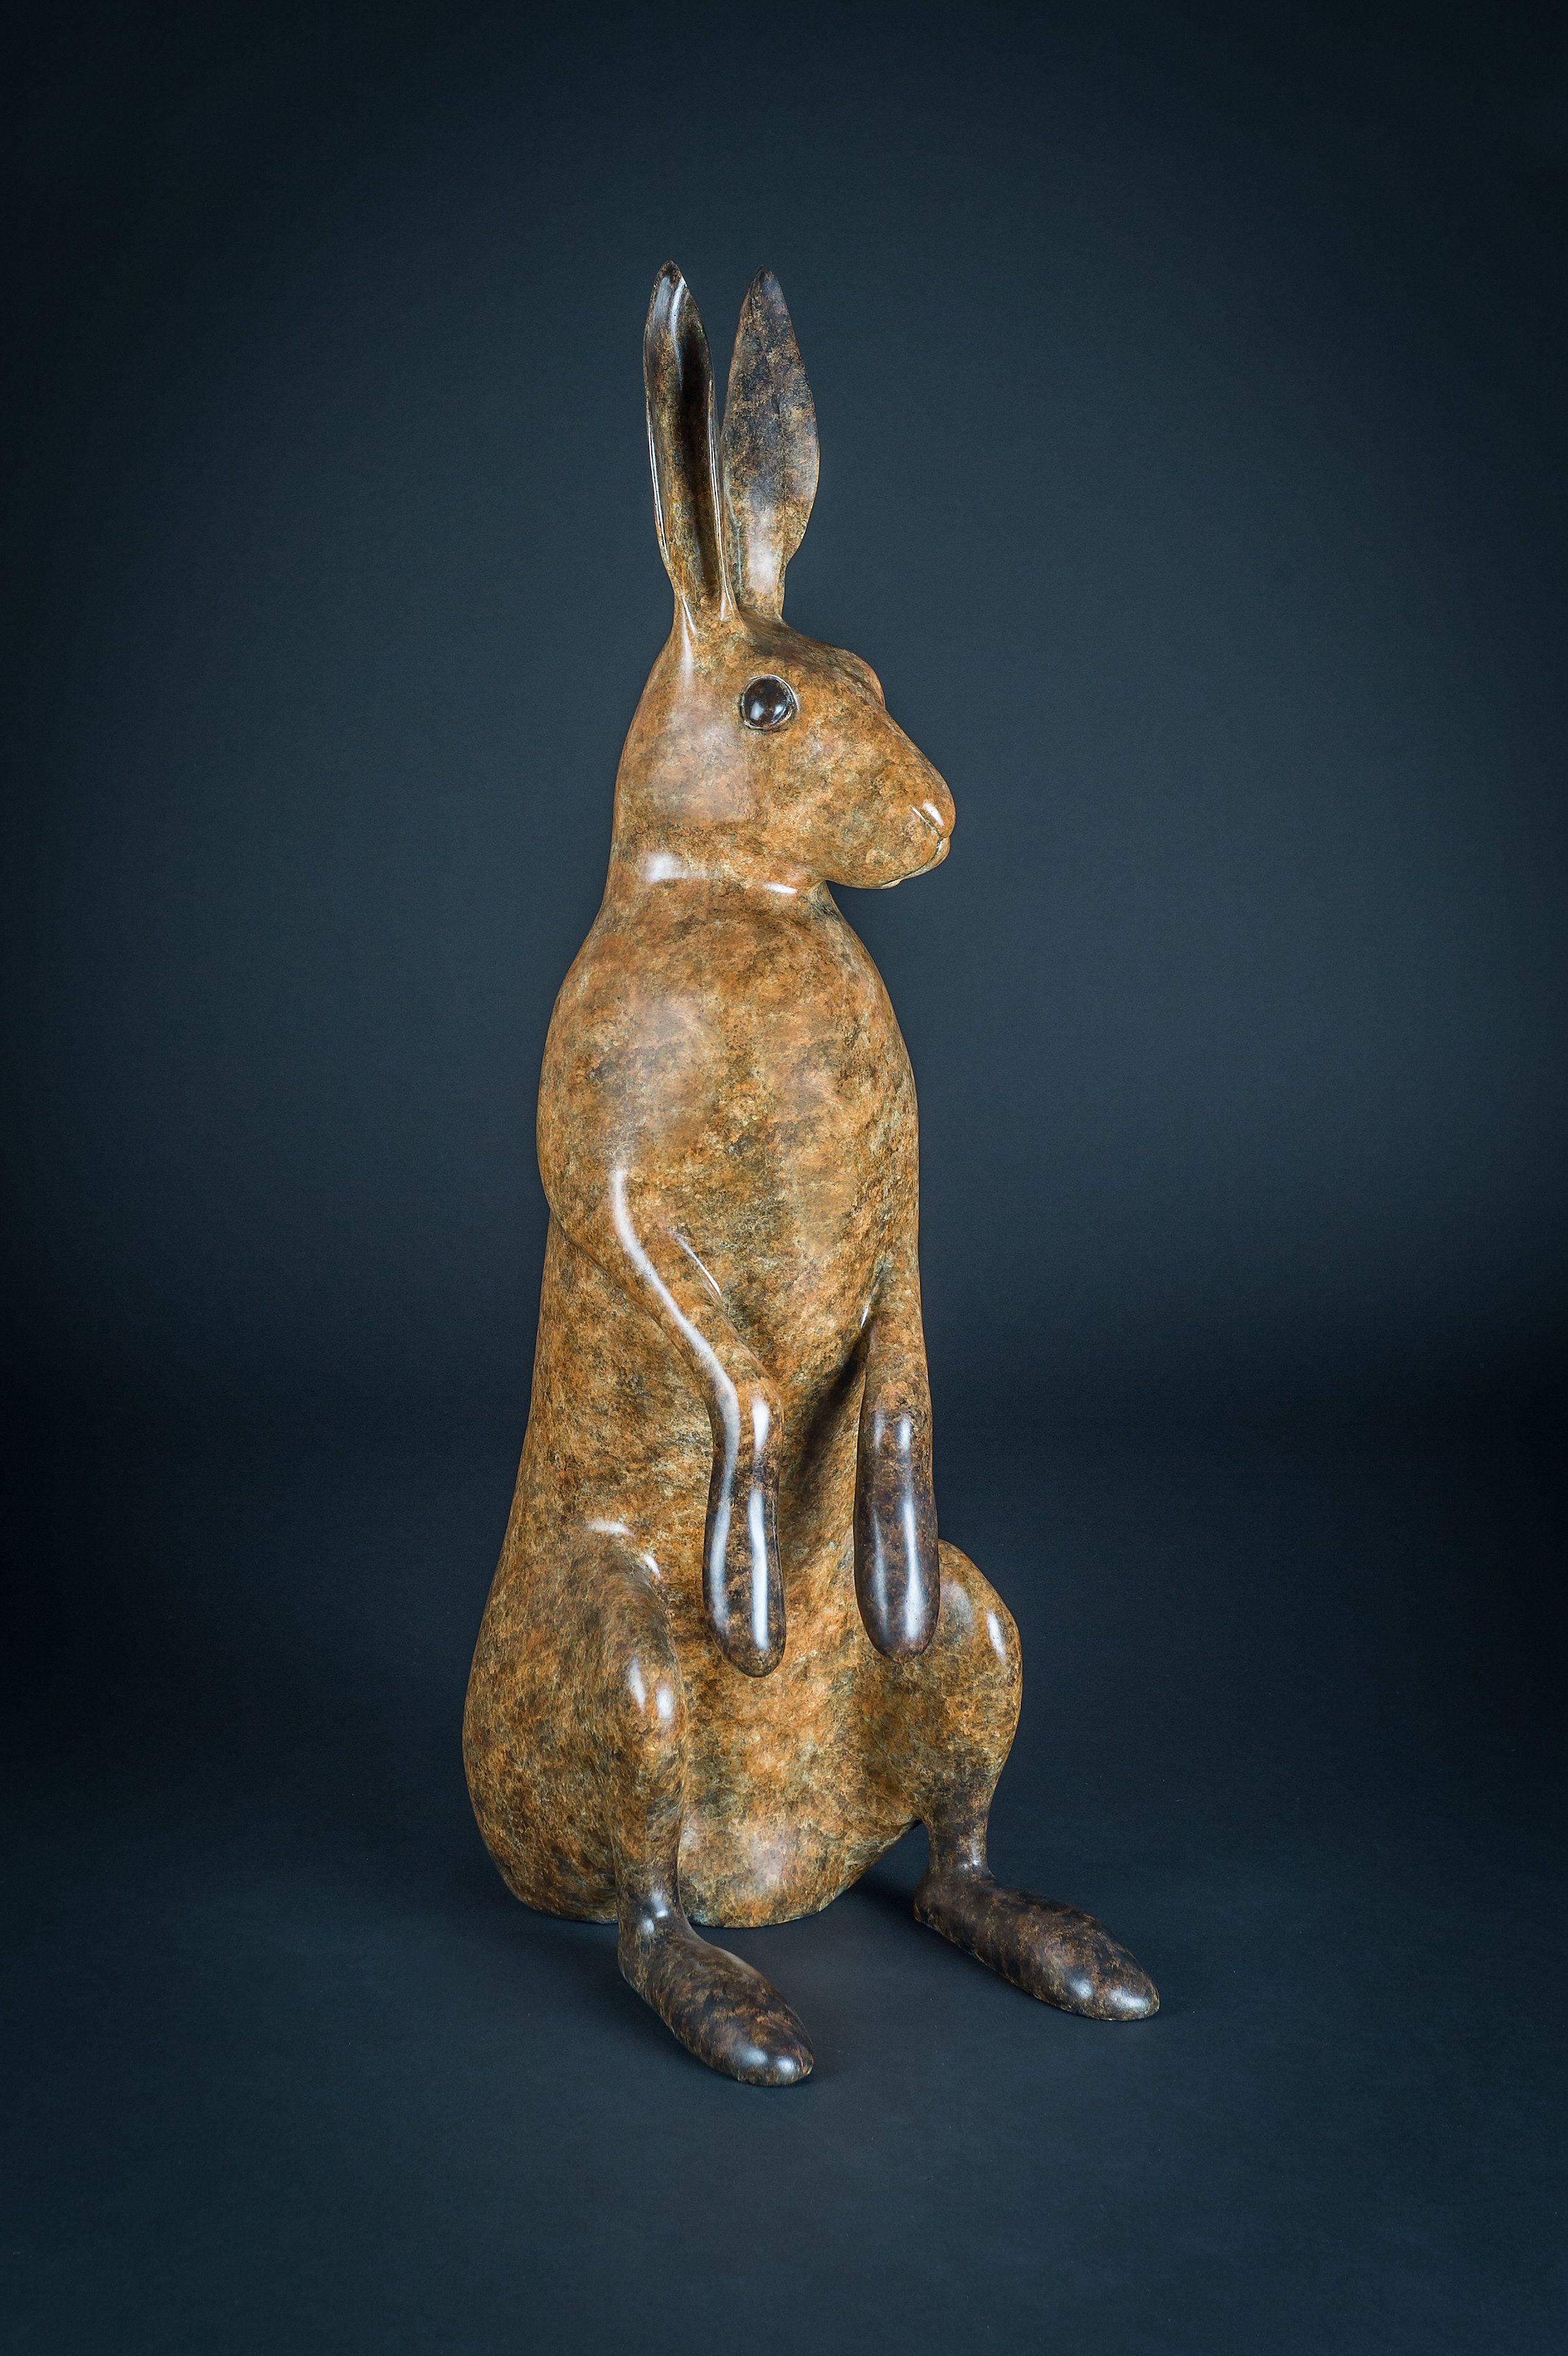 'Majestic Hare' - Richard Smith.